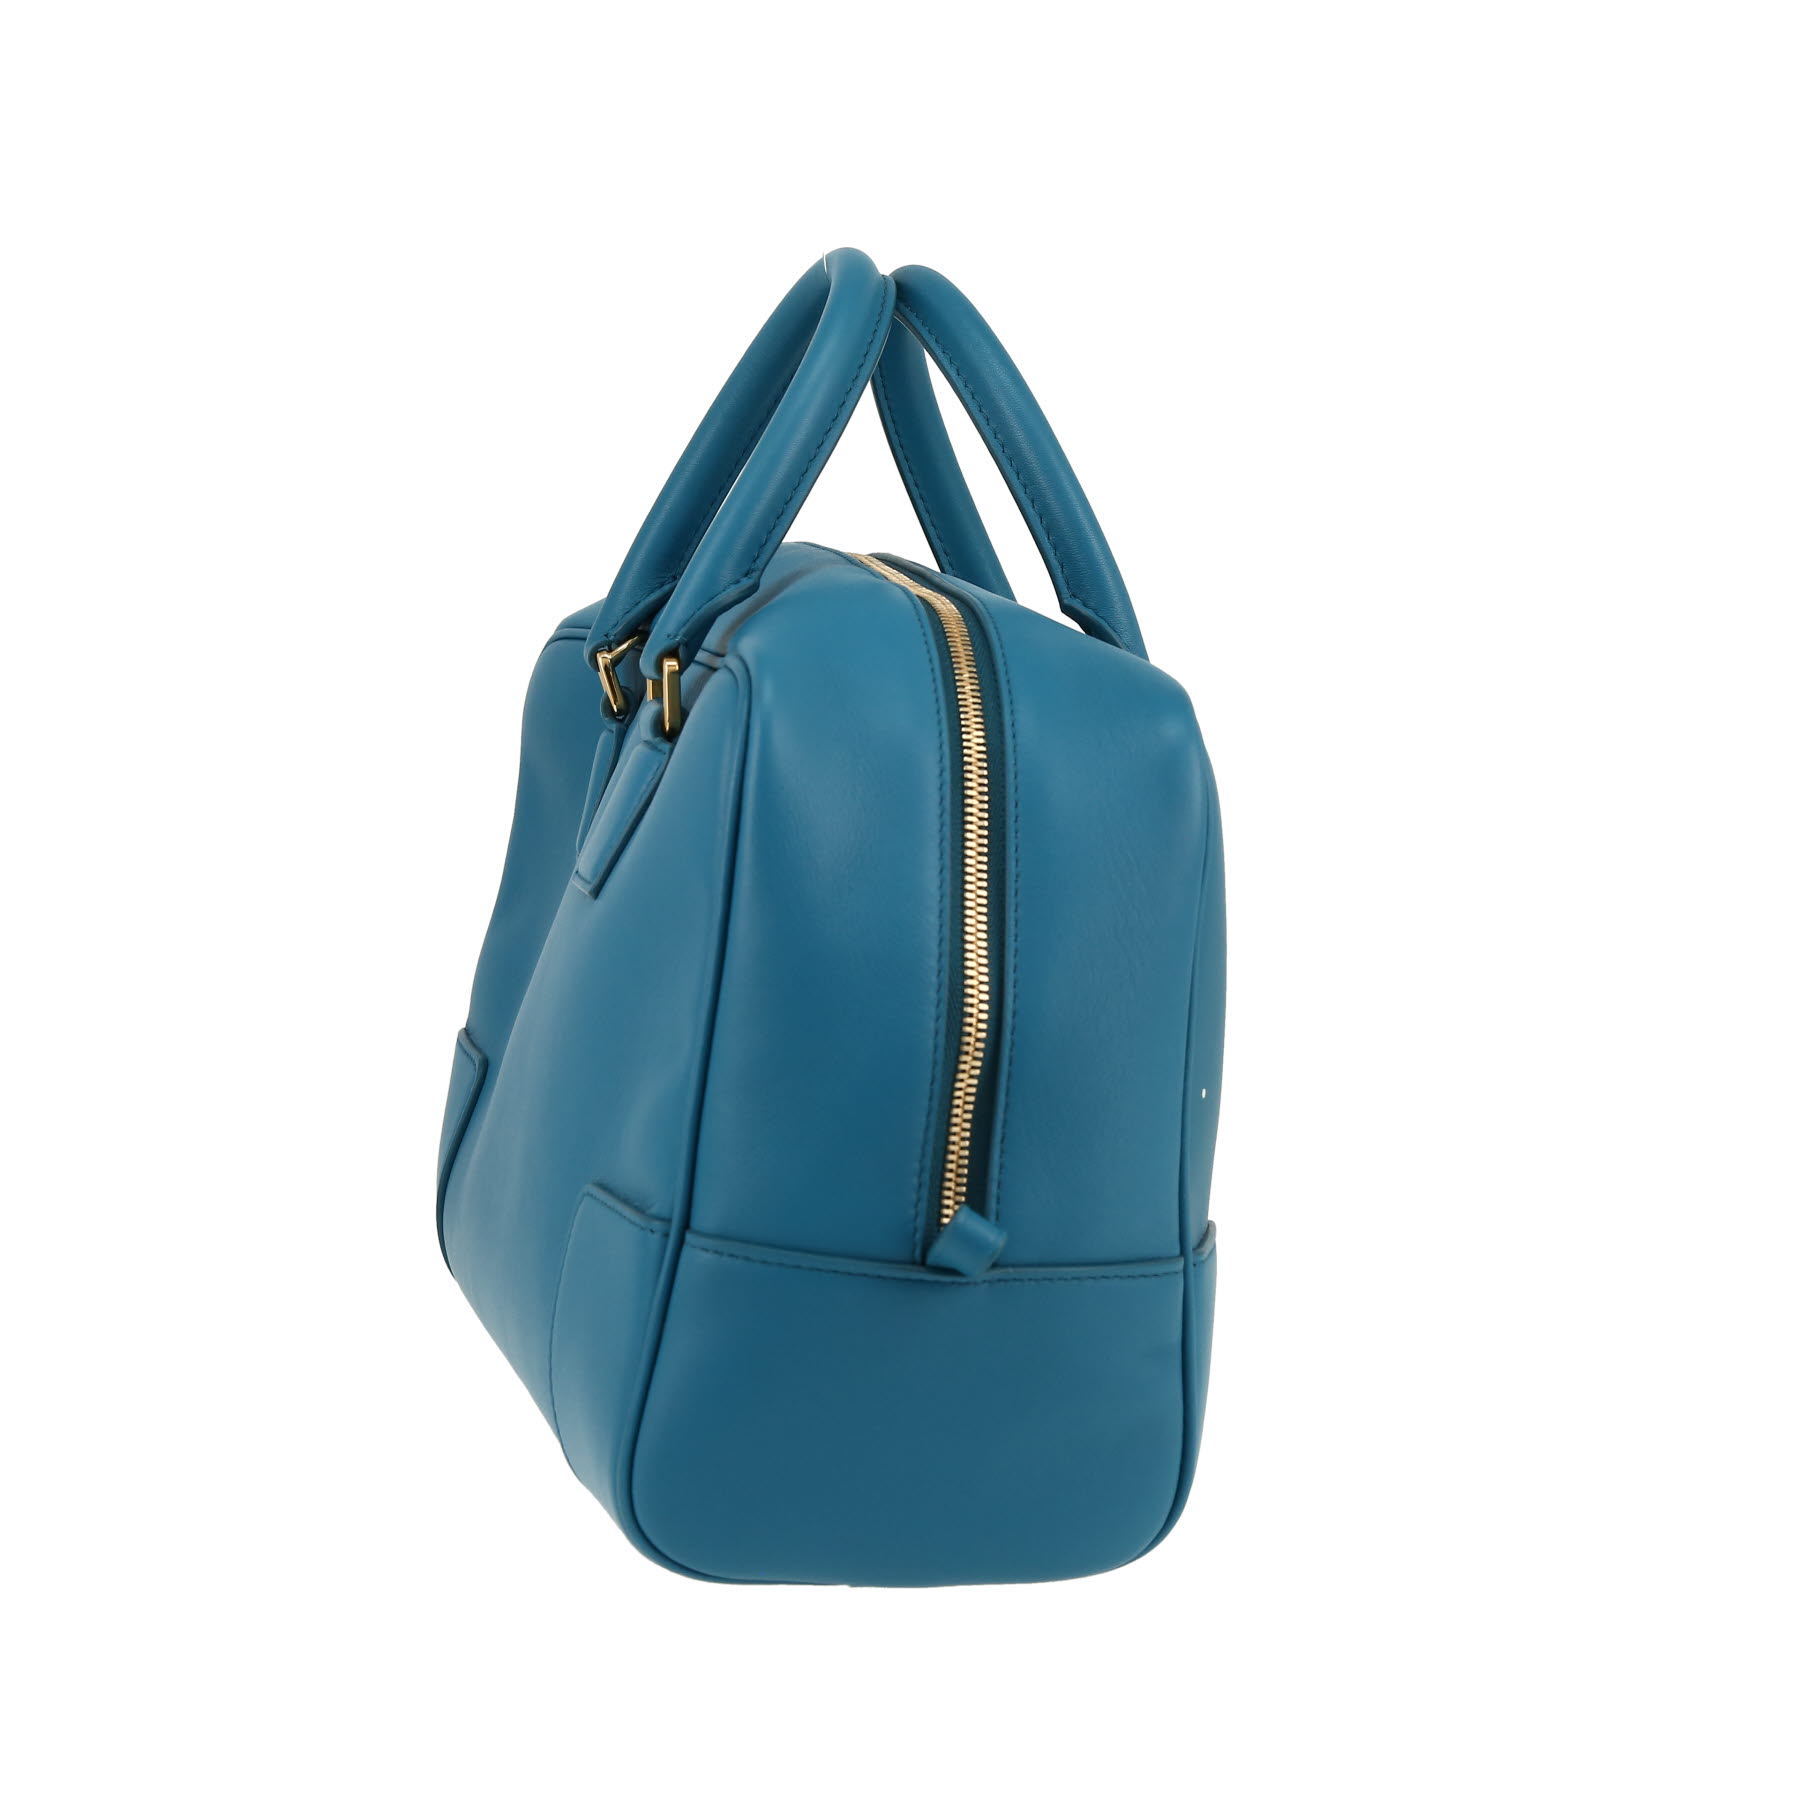 Handbag In Blue Leather